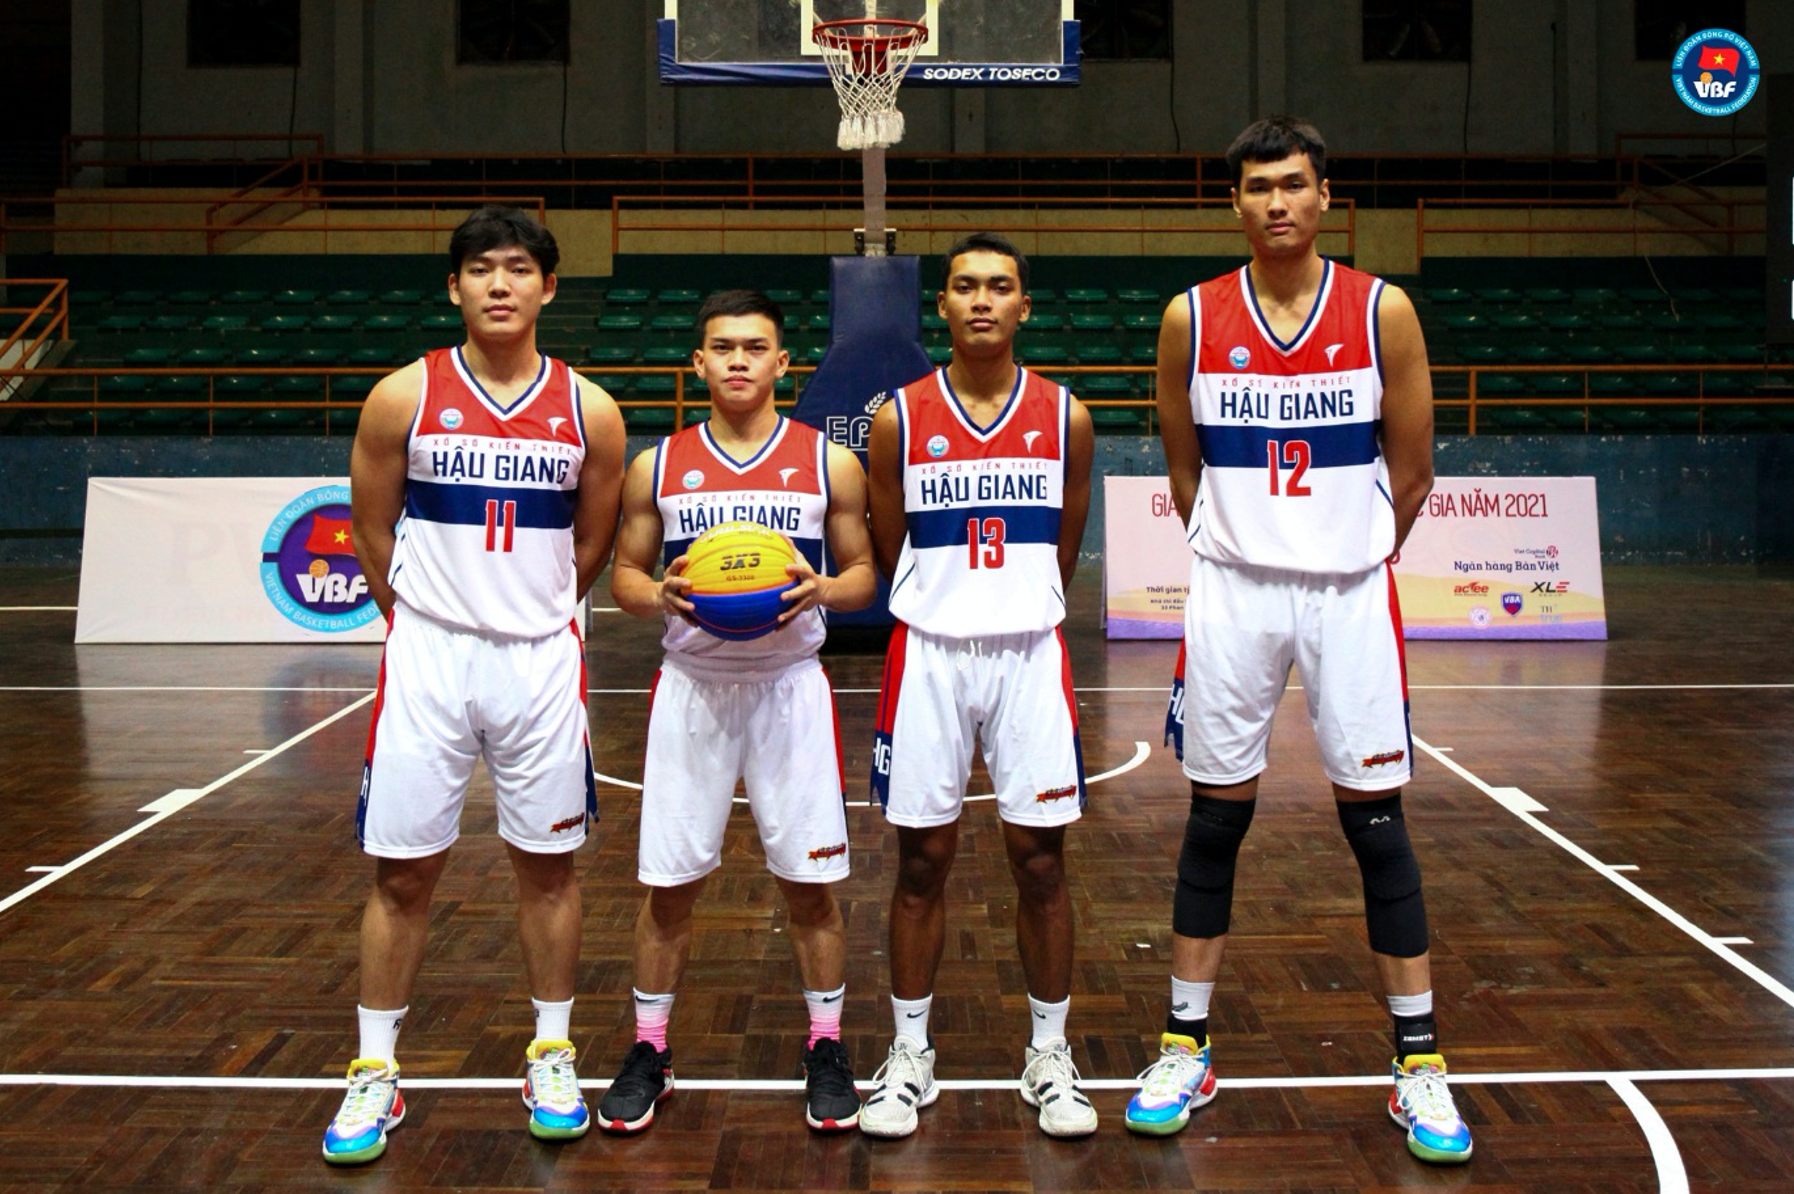 XSKT Hau Giang 1 players at the 2021 National 3x3 U23 Basketball Championship. Photo: VBA